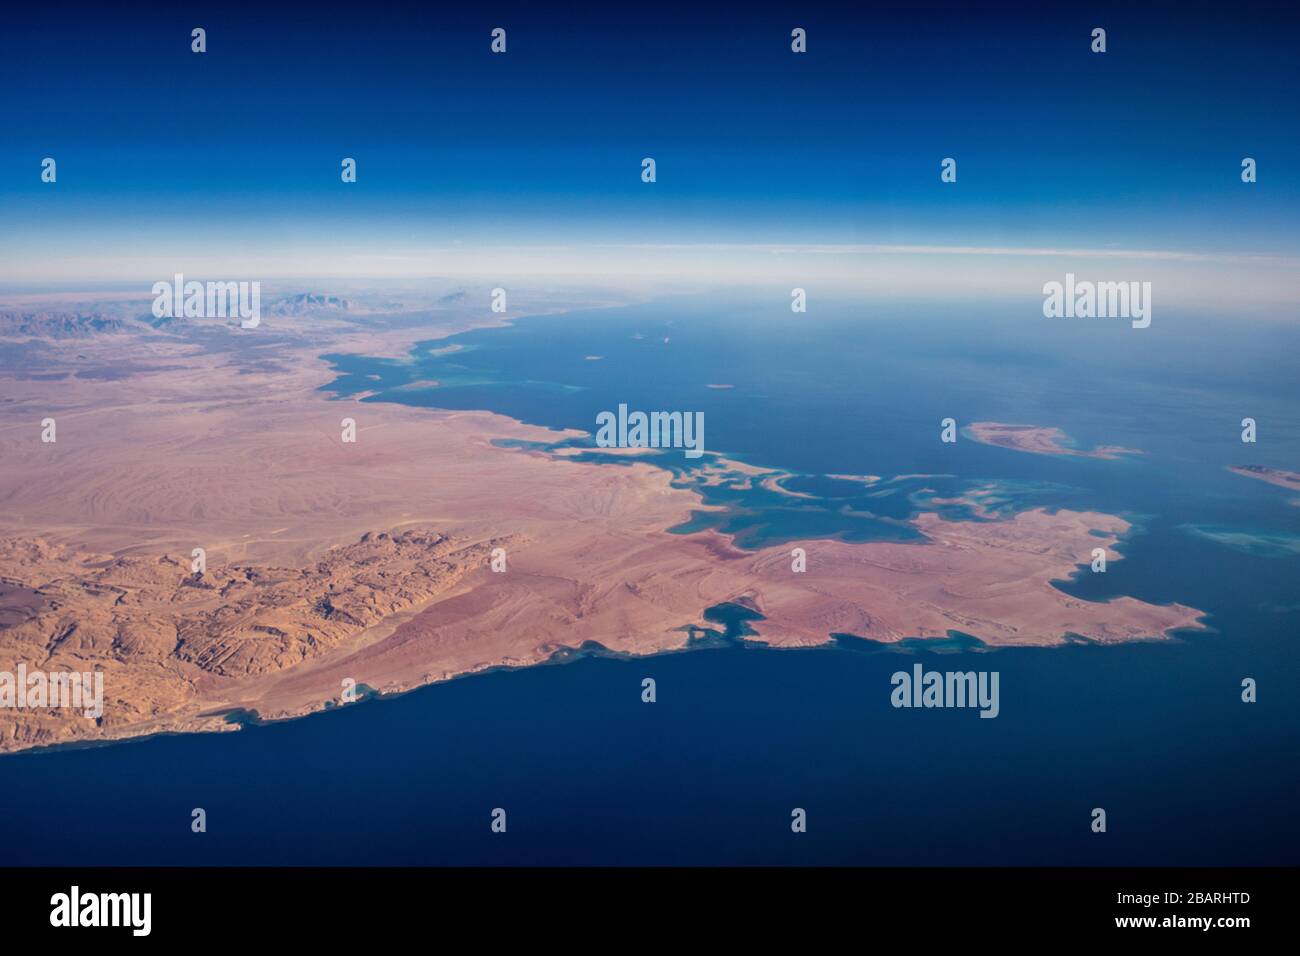 Gulf of Aqaba, Sinai Peninsula to the left, Saudi Arabian Coastline to the right Stock Photo